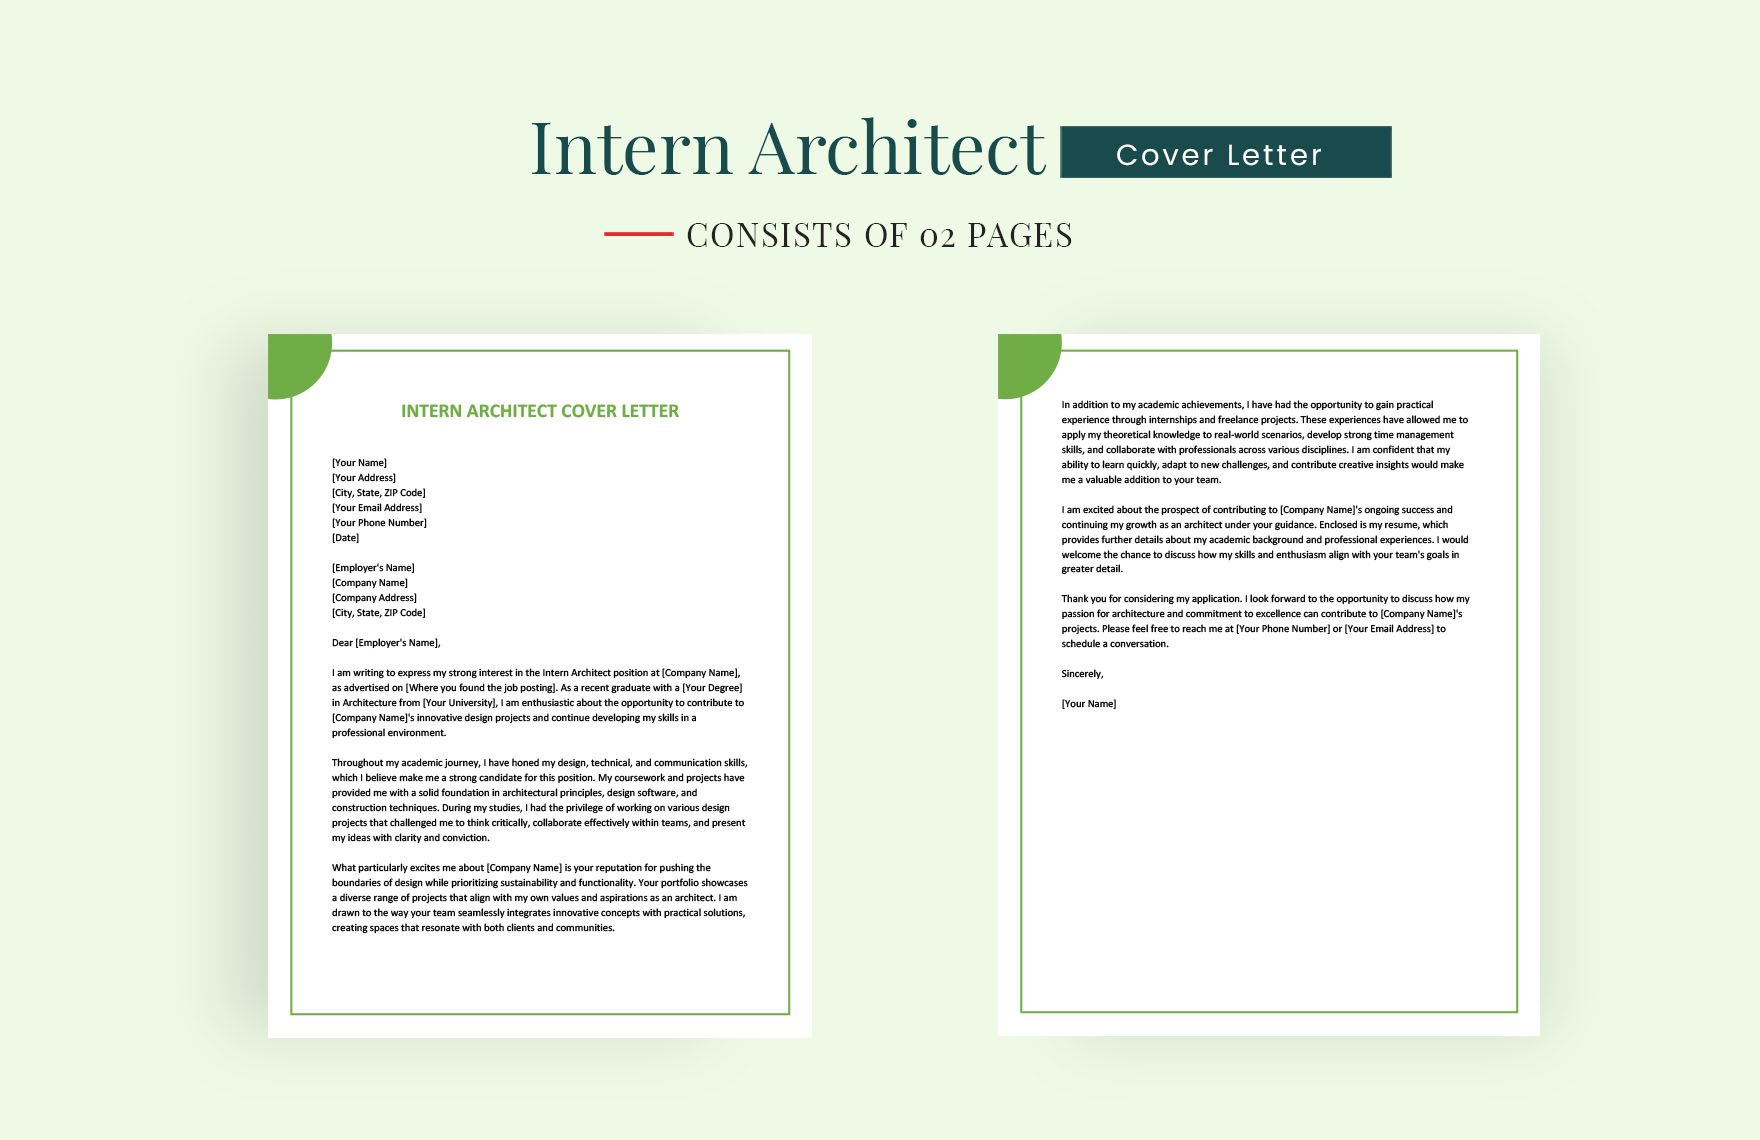 Intern Architect Cover Letter